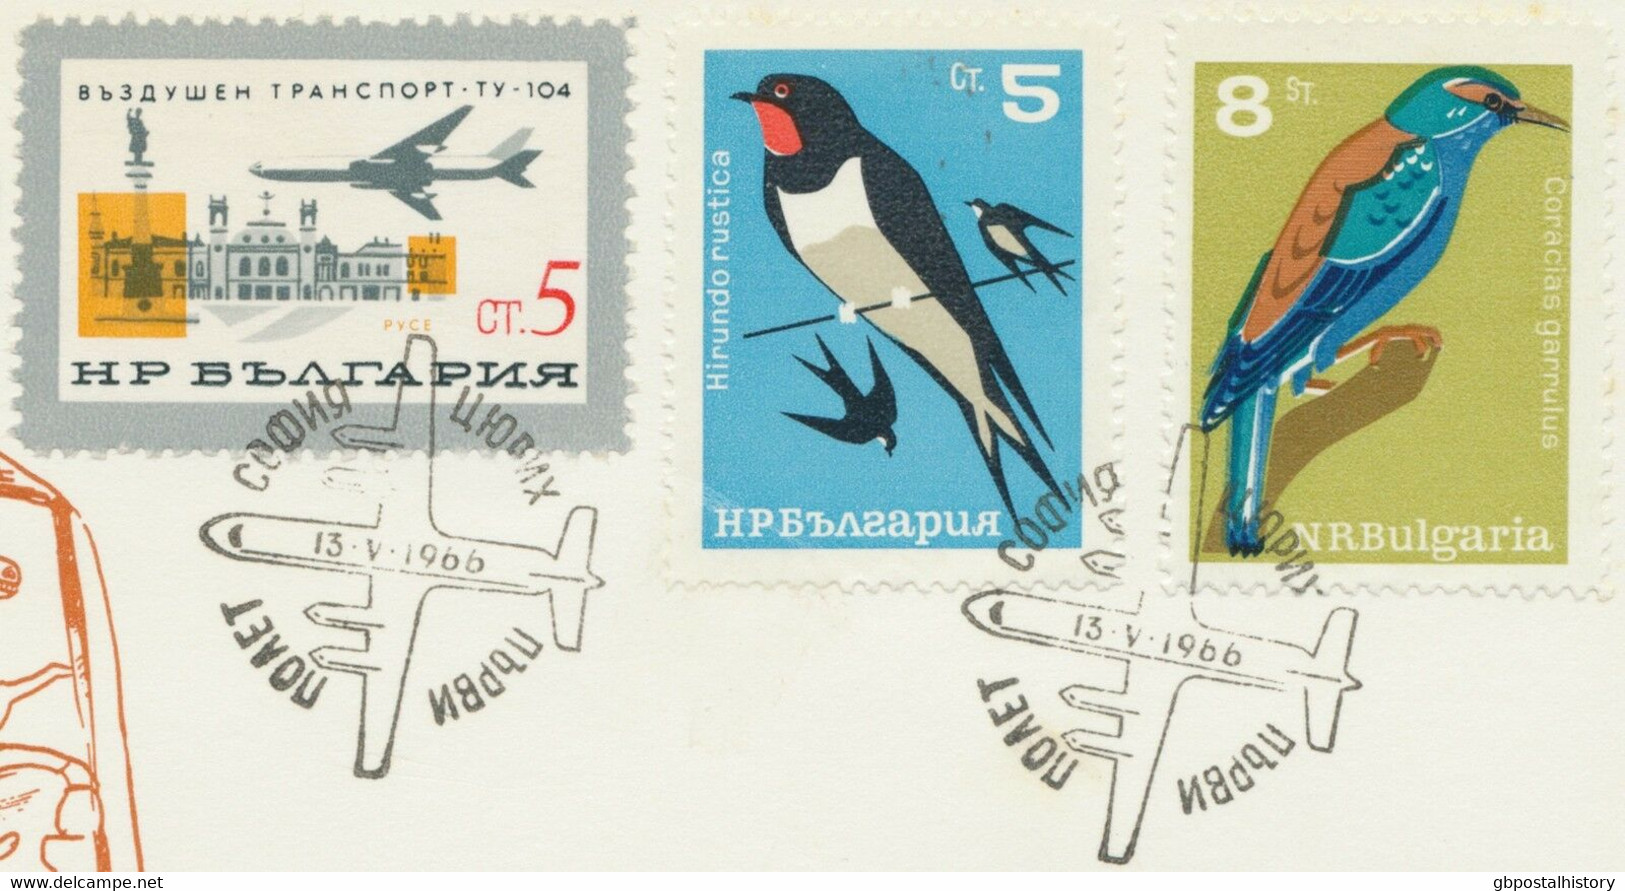 BULGARIEN 1966 Erstflug TABSO Erster Direktflug M. Iljuschin 18 „SOFIA - ZÜRICH" - Posta Aerea